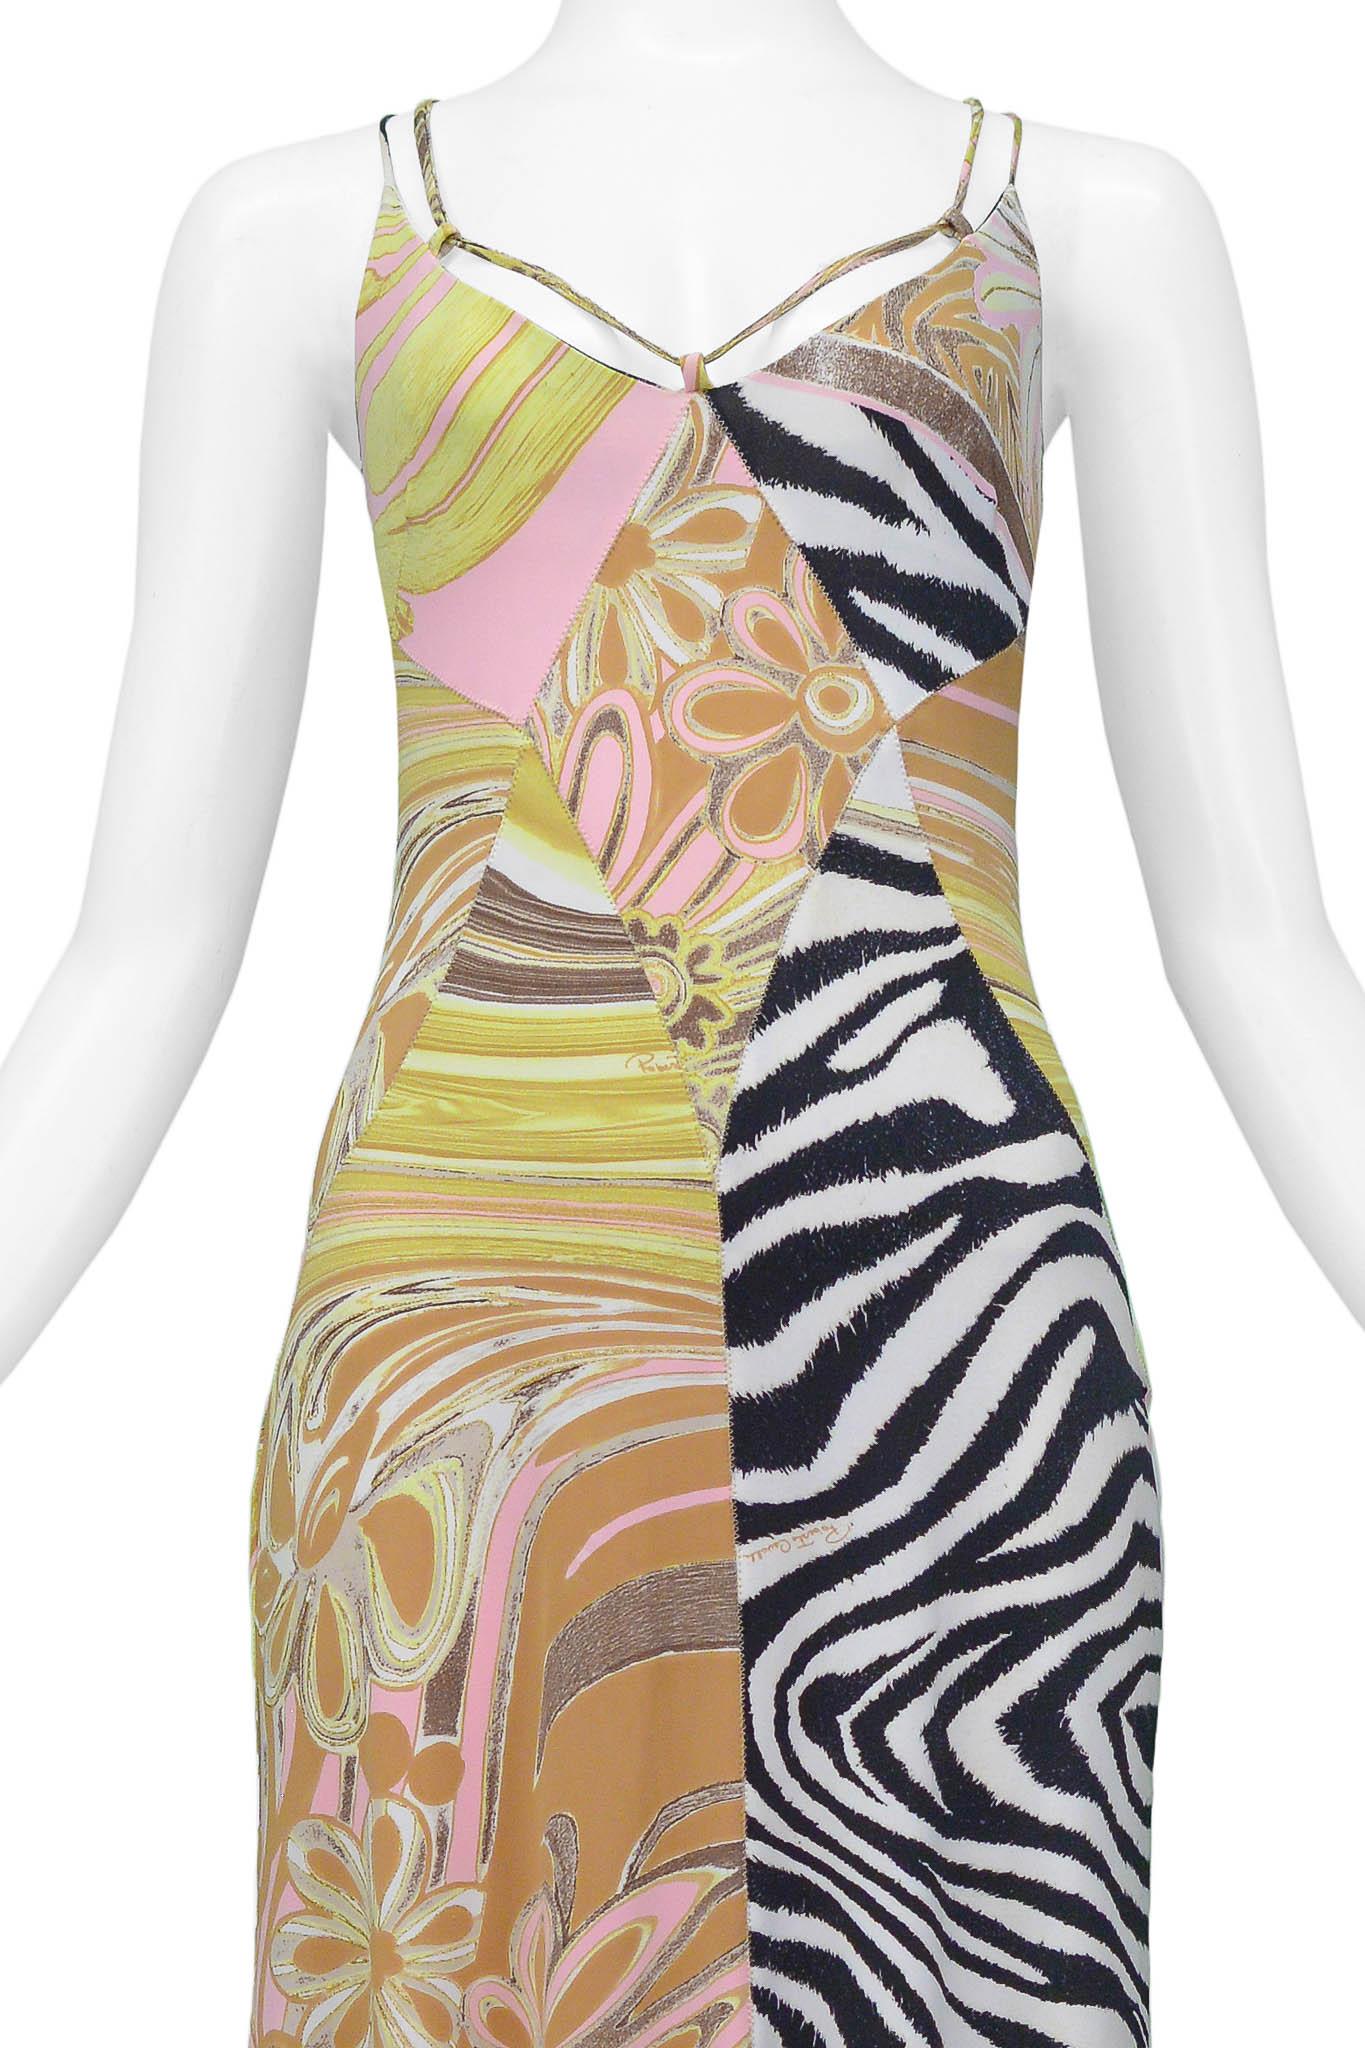 Roberto Cavalli Zebra & Floral Multi Print Maxi Dress In Excellent Condition For Sale In Los Angeles, CA